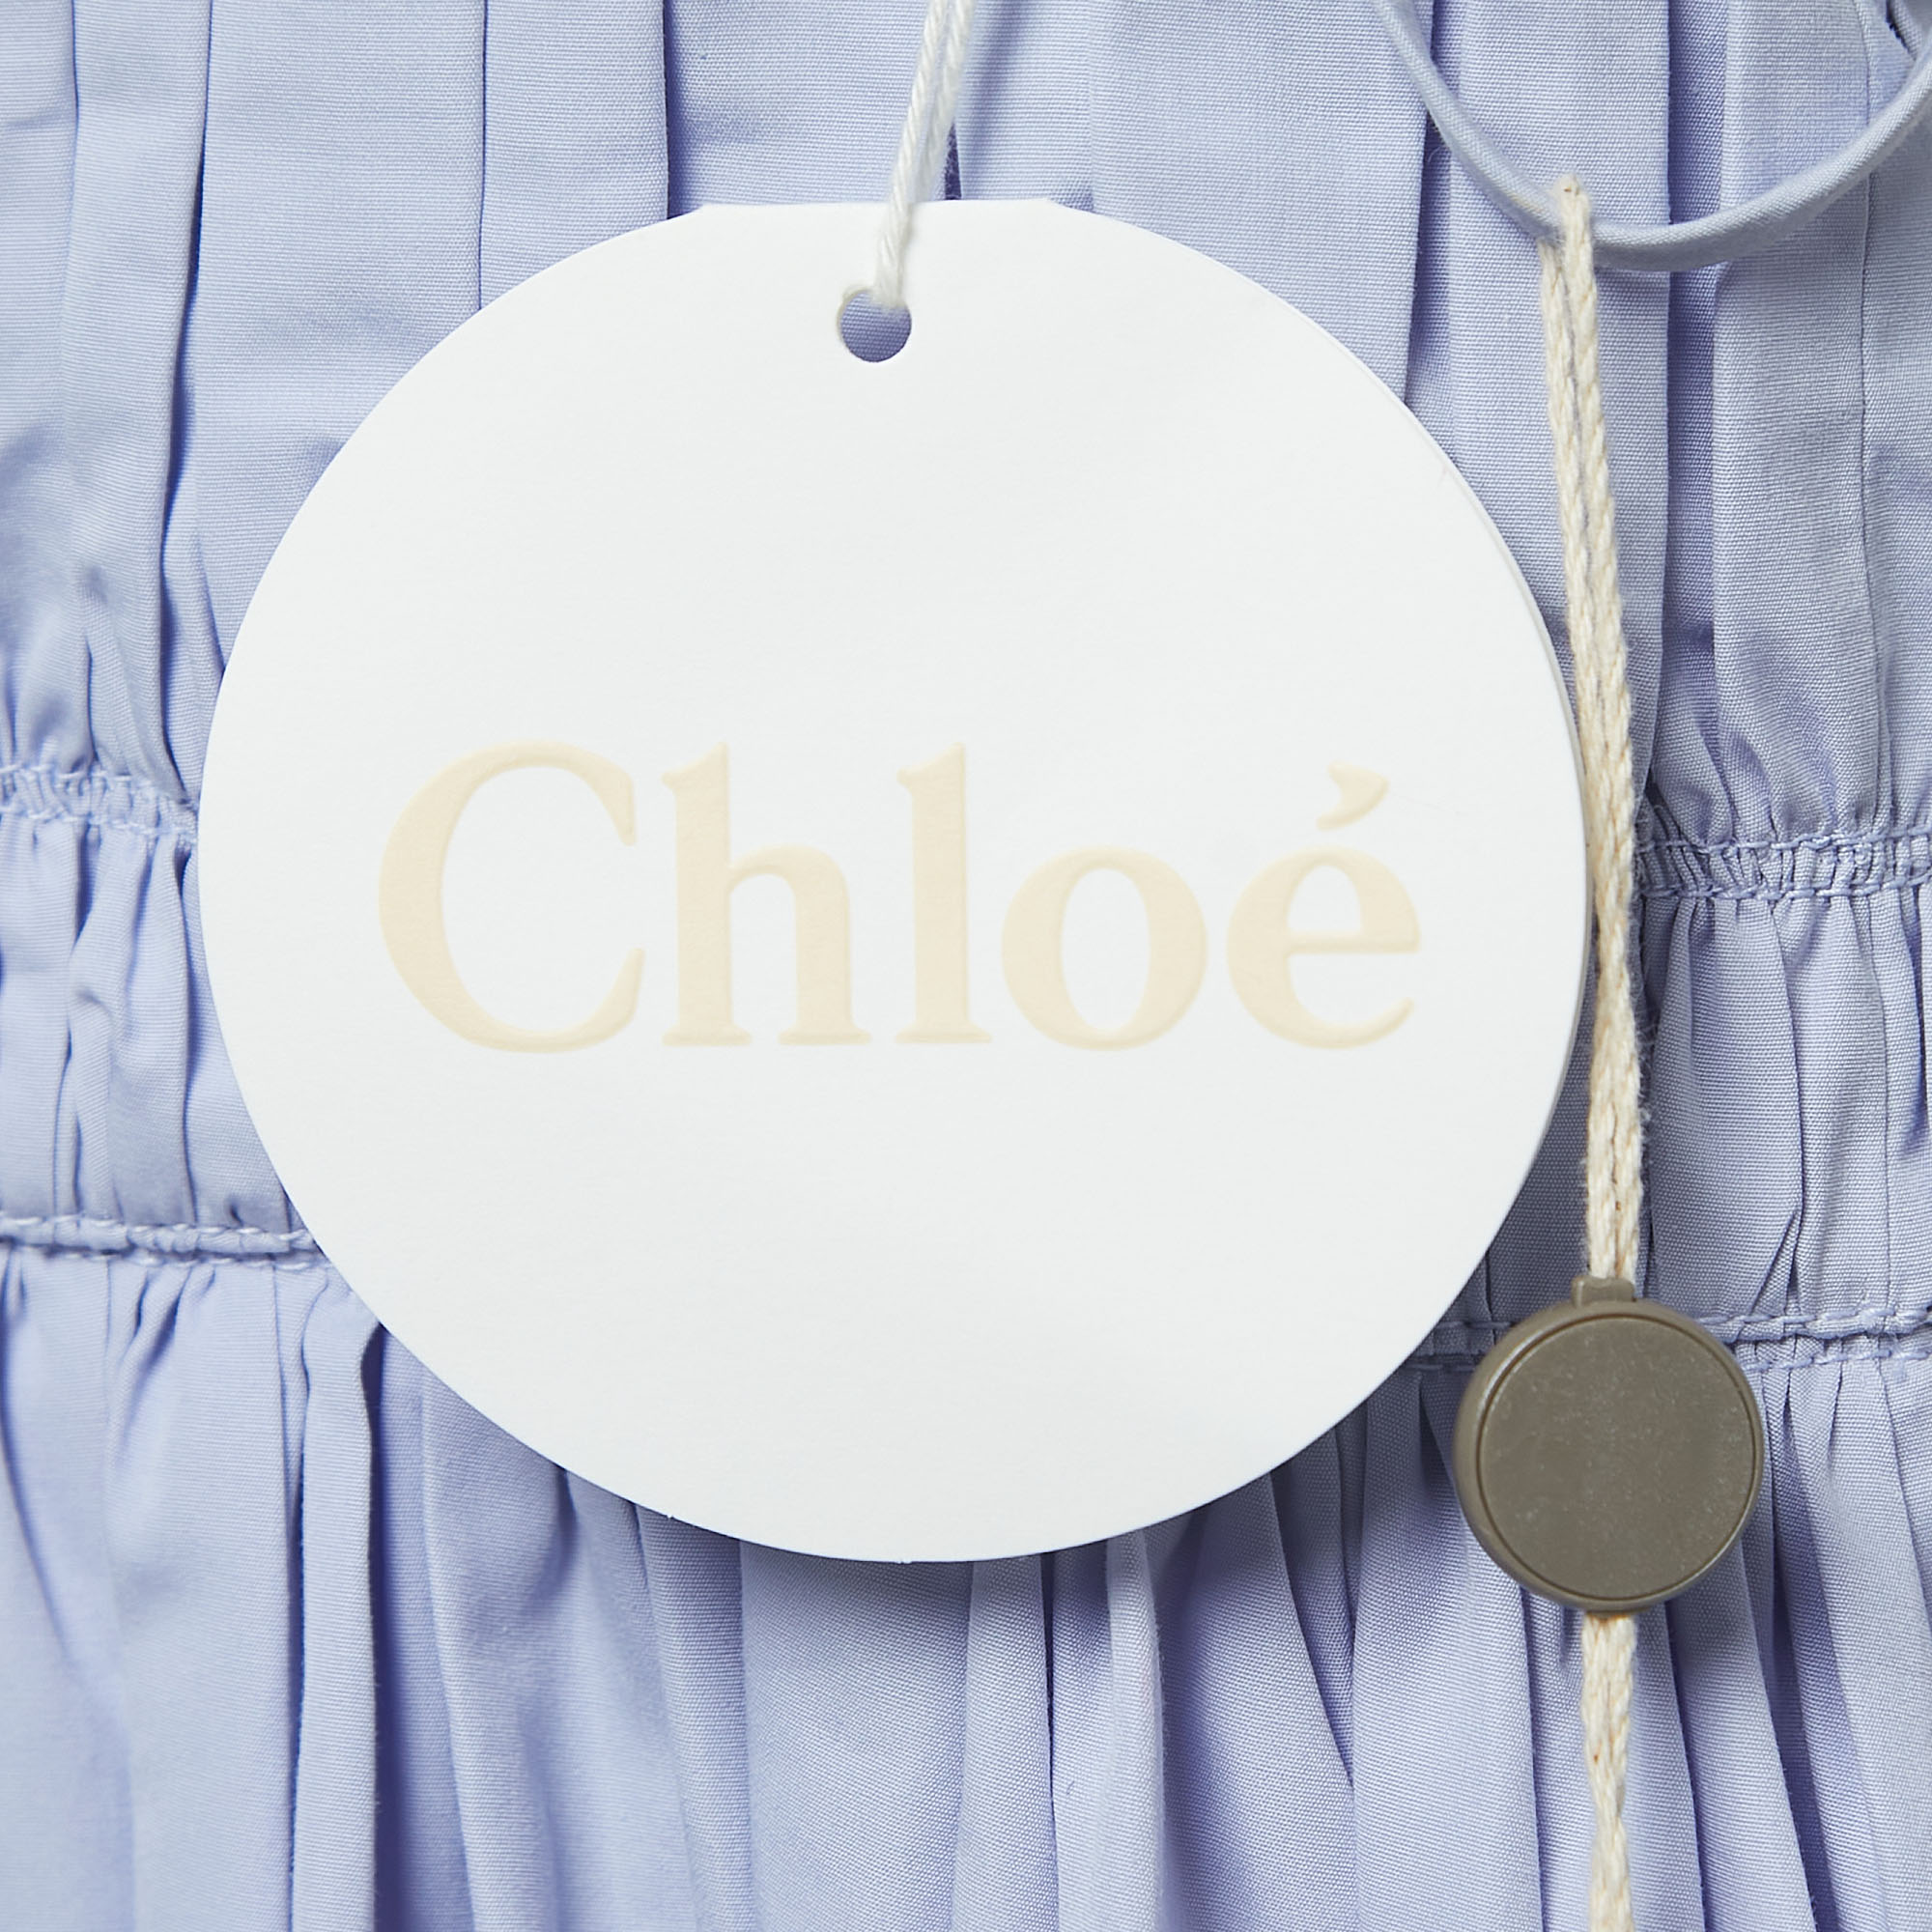 Chloe Blue Cotton Strappy Midi Dress M